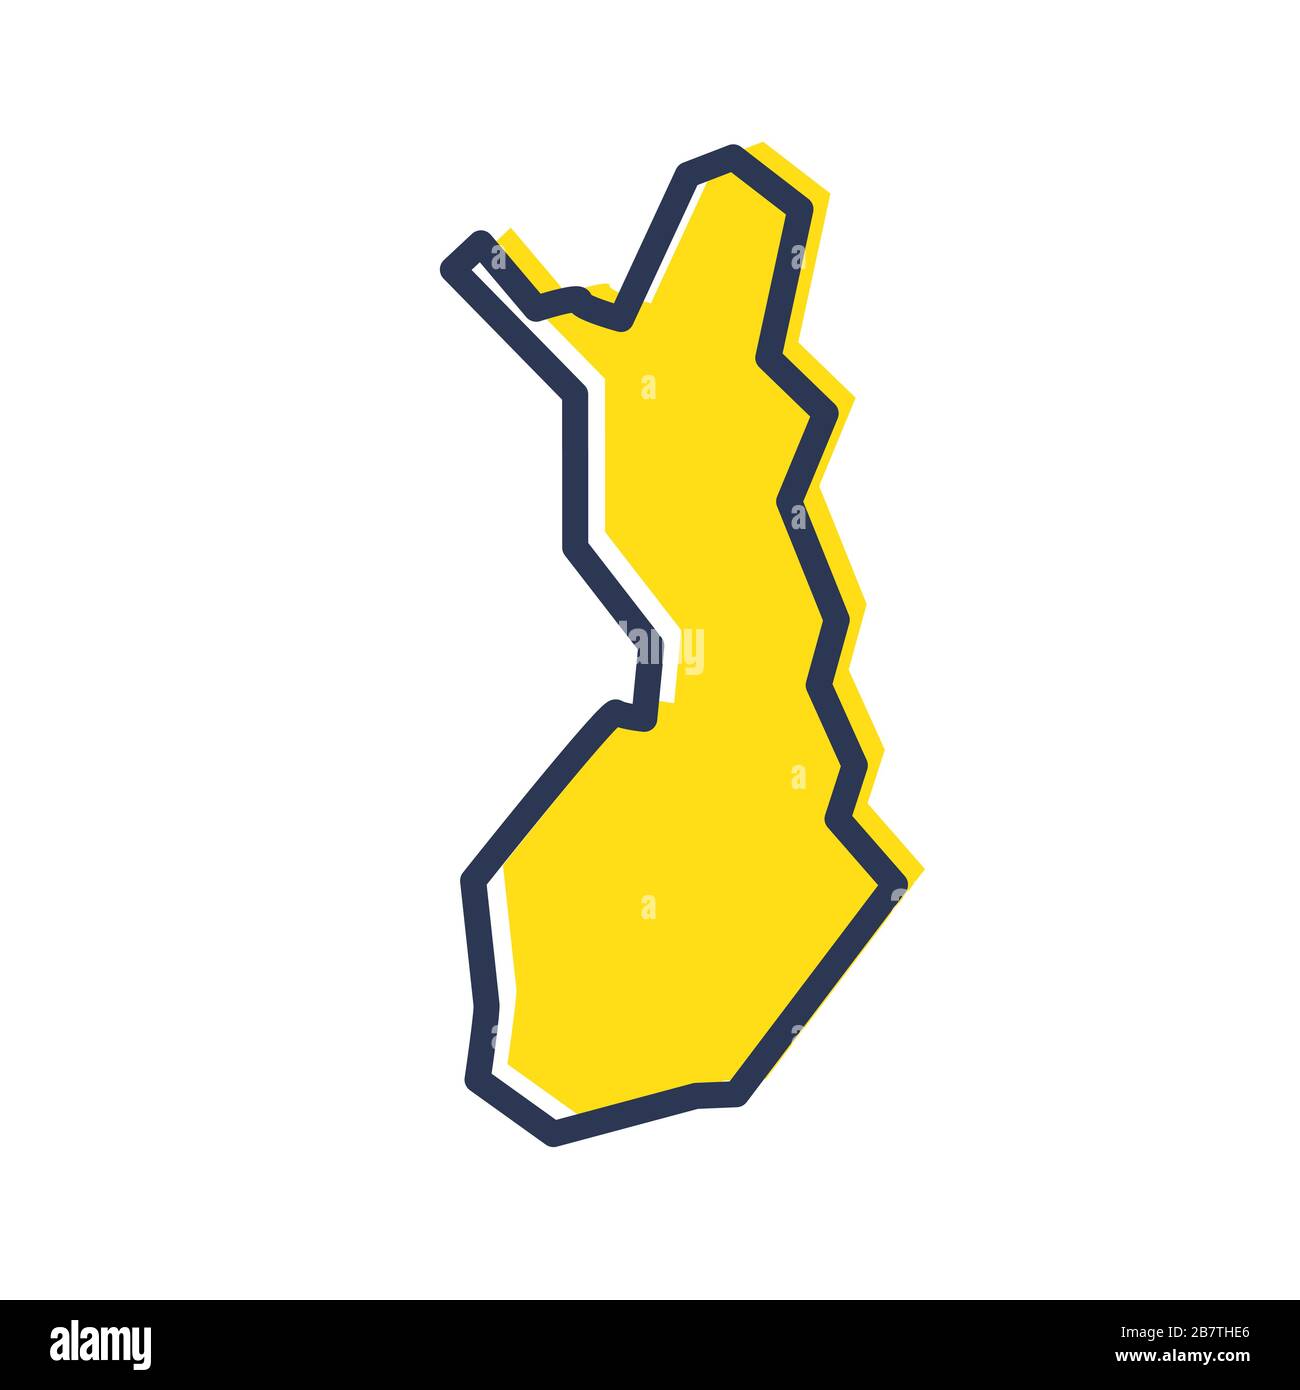 Stilisierte gelbe Umrißkarte Finnlands Stock Vektor